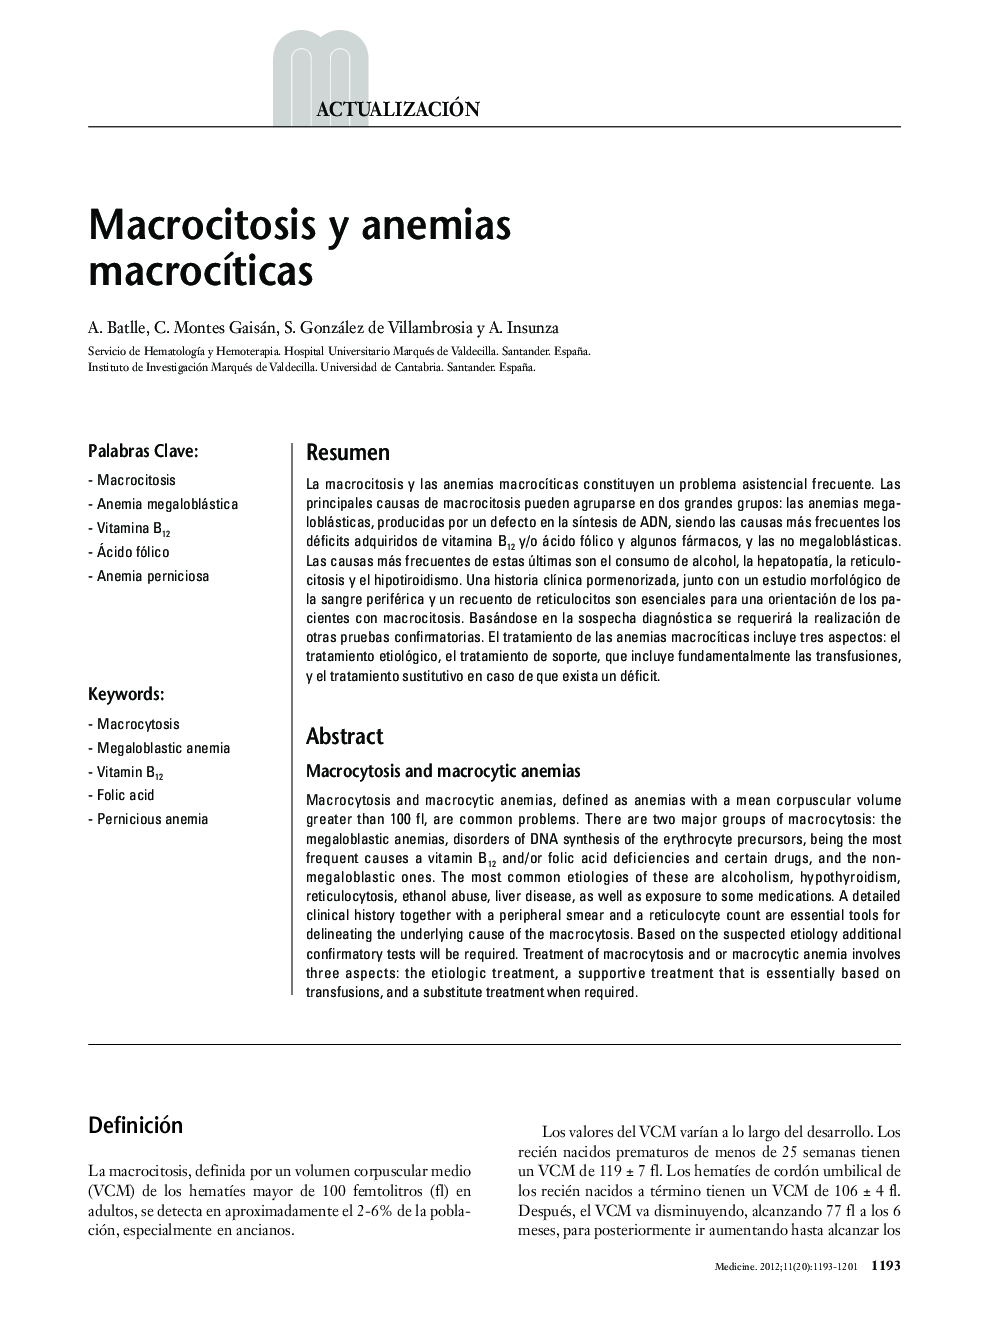 Macrocitosis y anemias macrocíticas